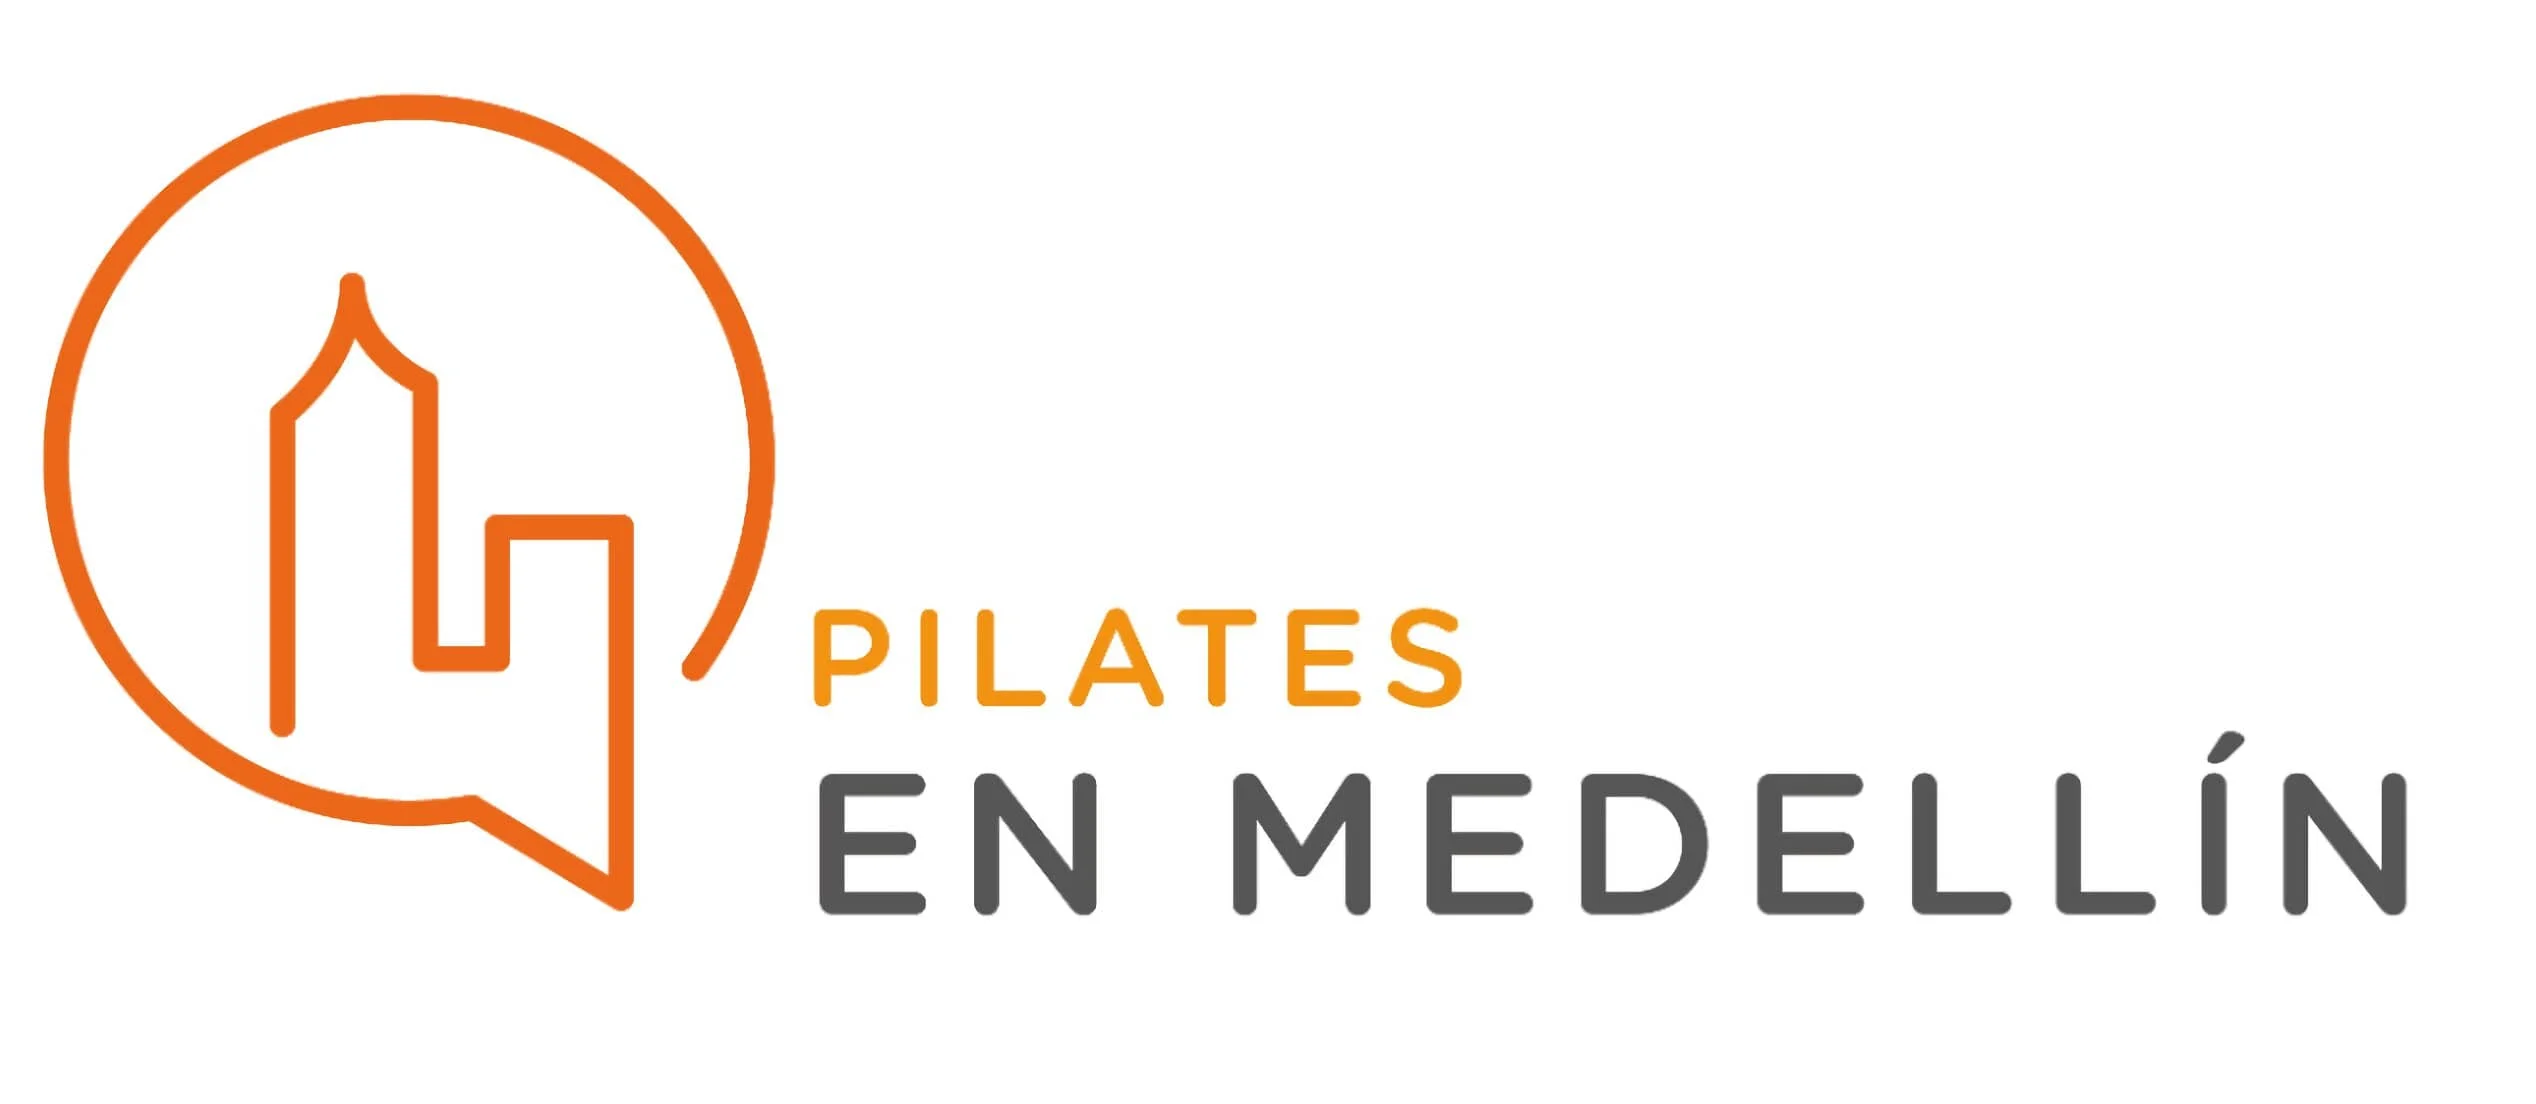 Pilates-balanced-core-pilates-5197